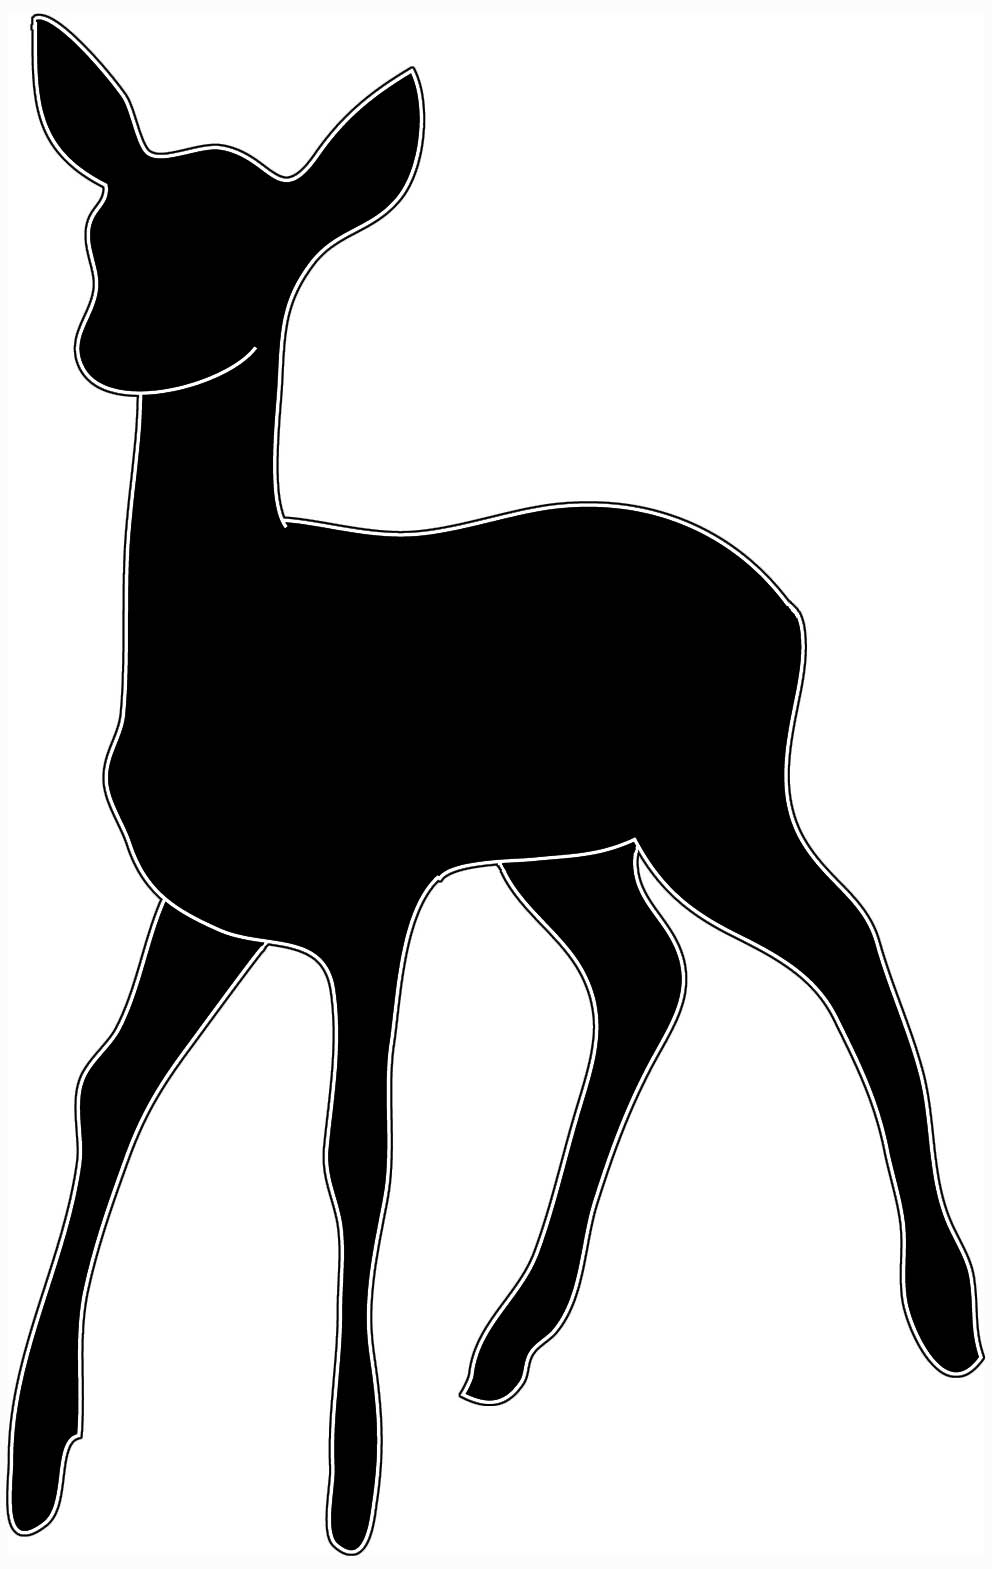 silhouette of running deer, black white silhouette of young deer